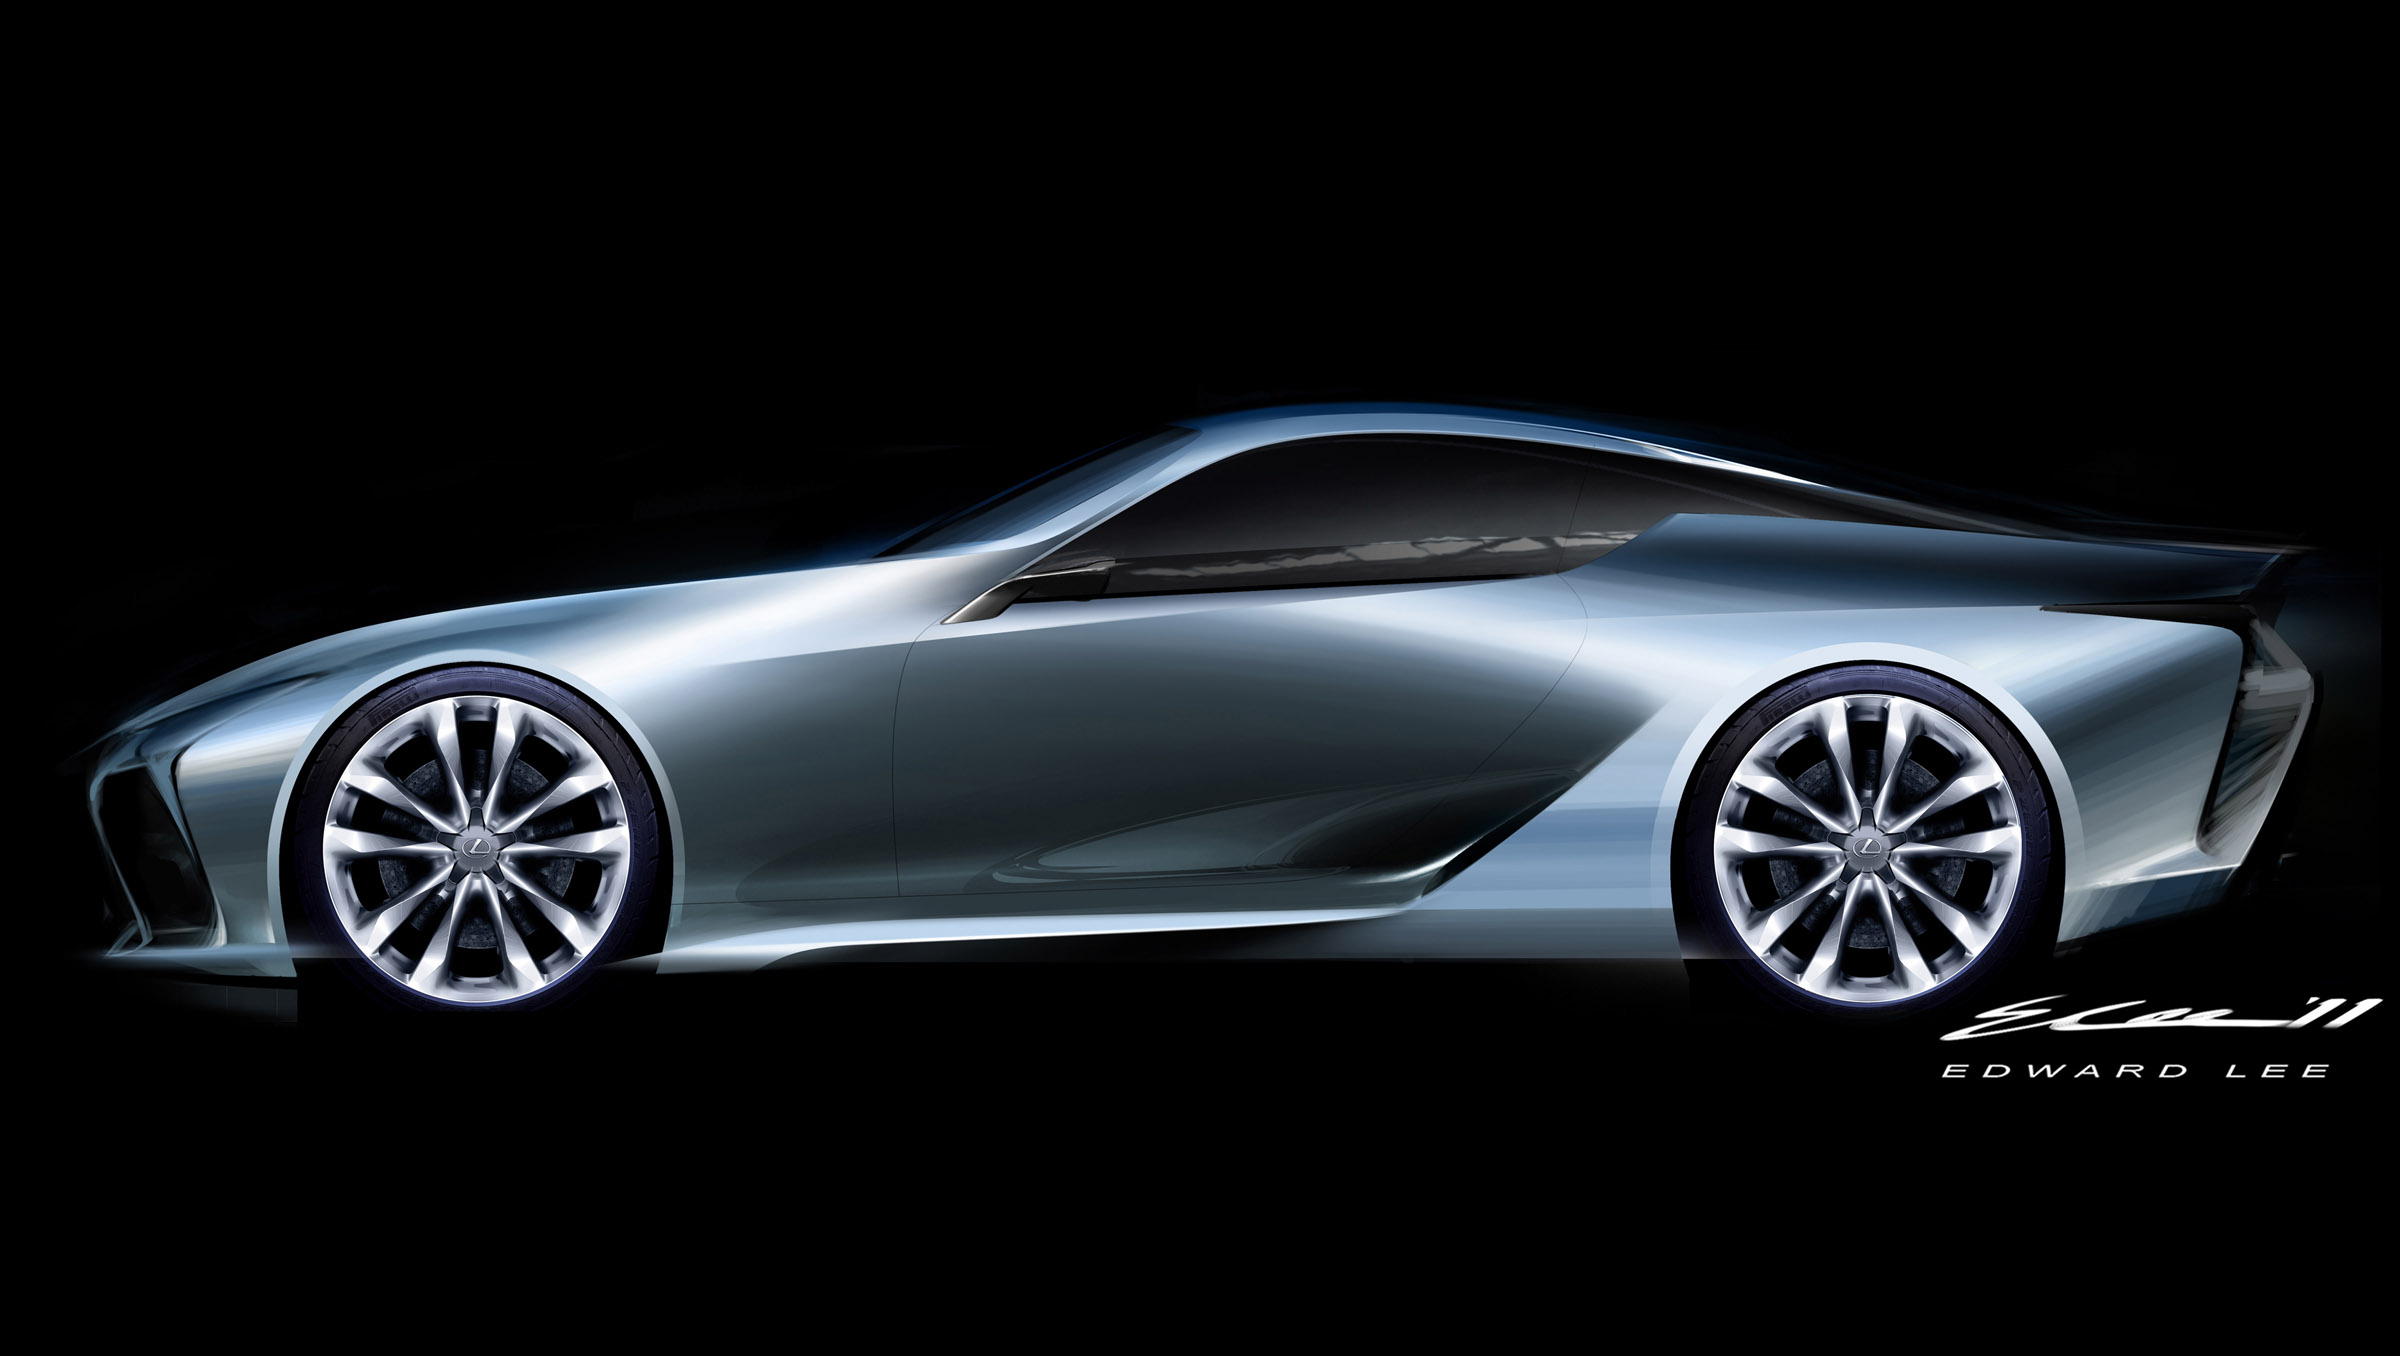 2012, Lexus, Lf lc, Sport, Coupe, Concept, Supercar, Supercars Wallpaper